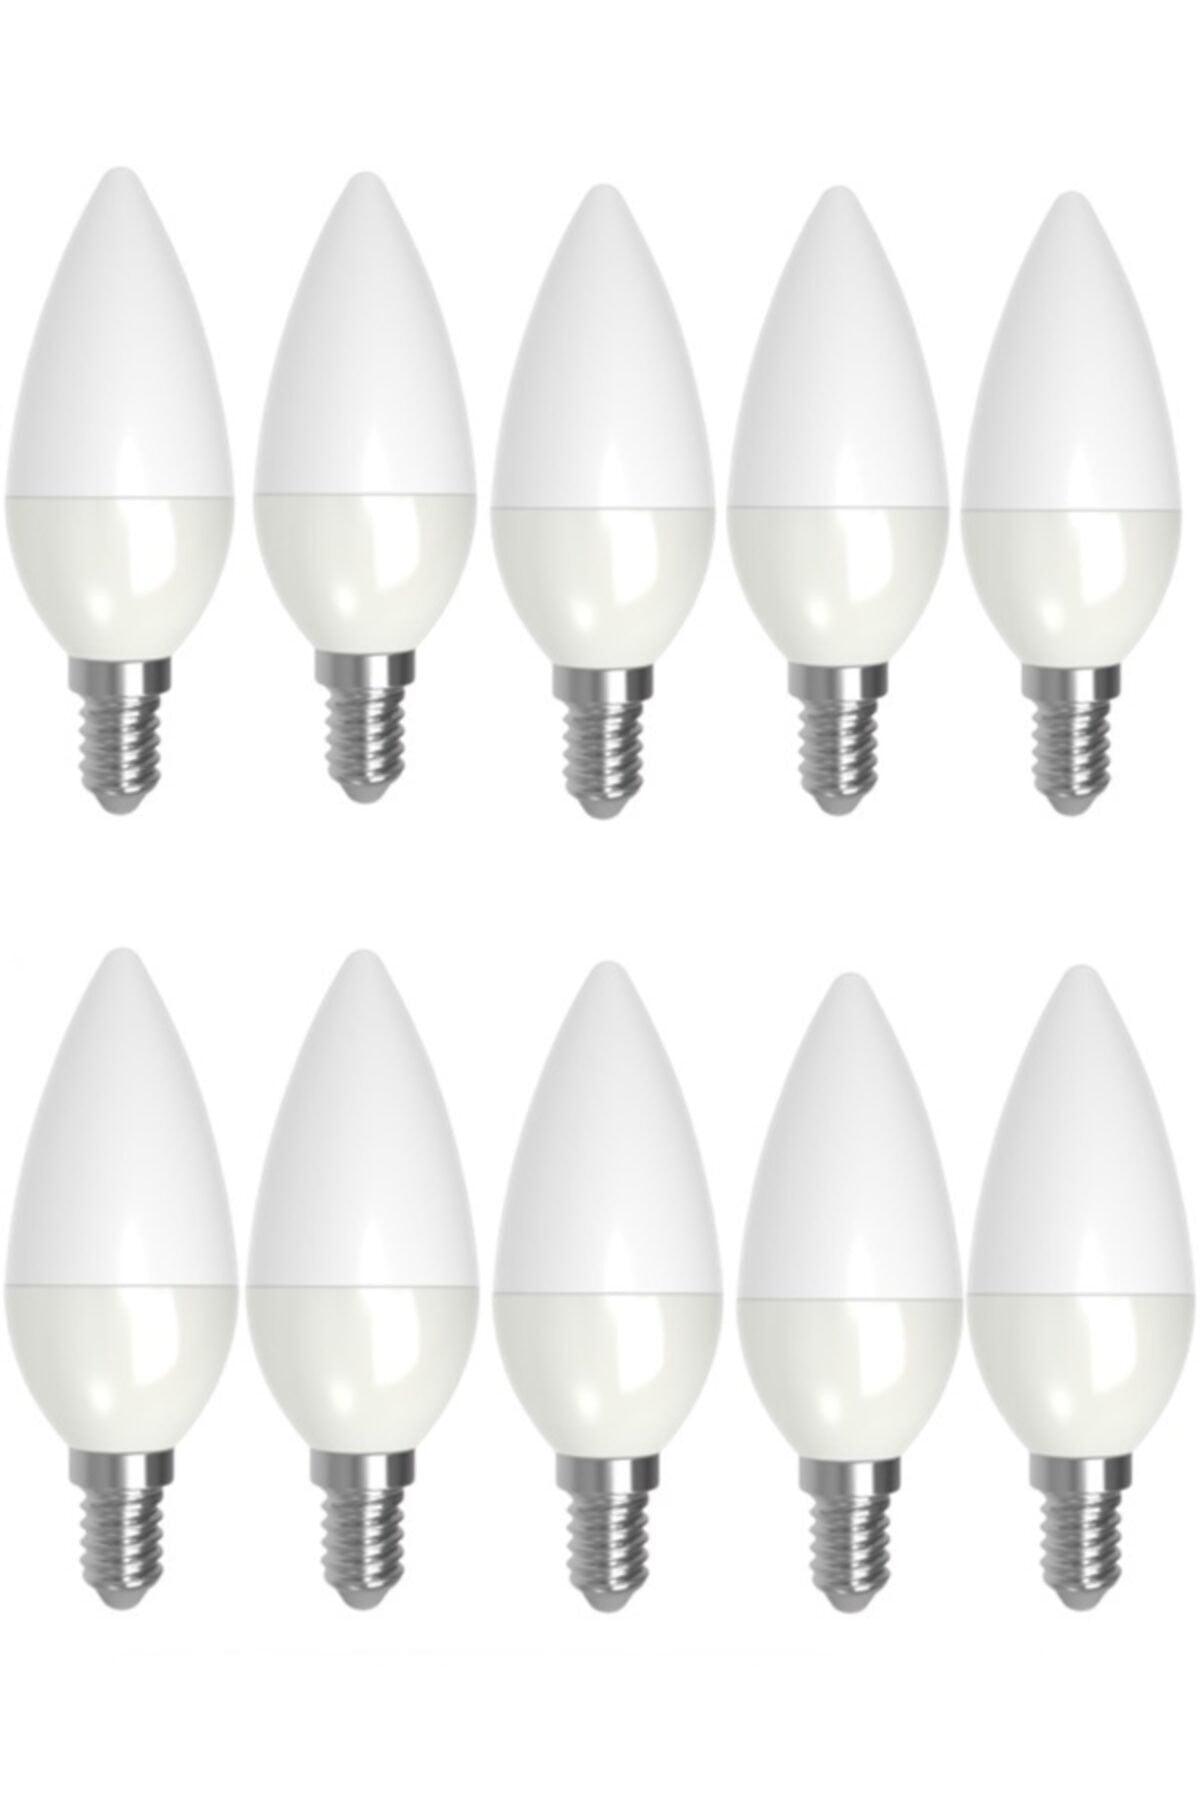 10 Pcs 8w Led Candle Bulb Chandelier Bulb Spark Plug